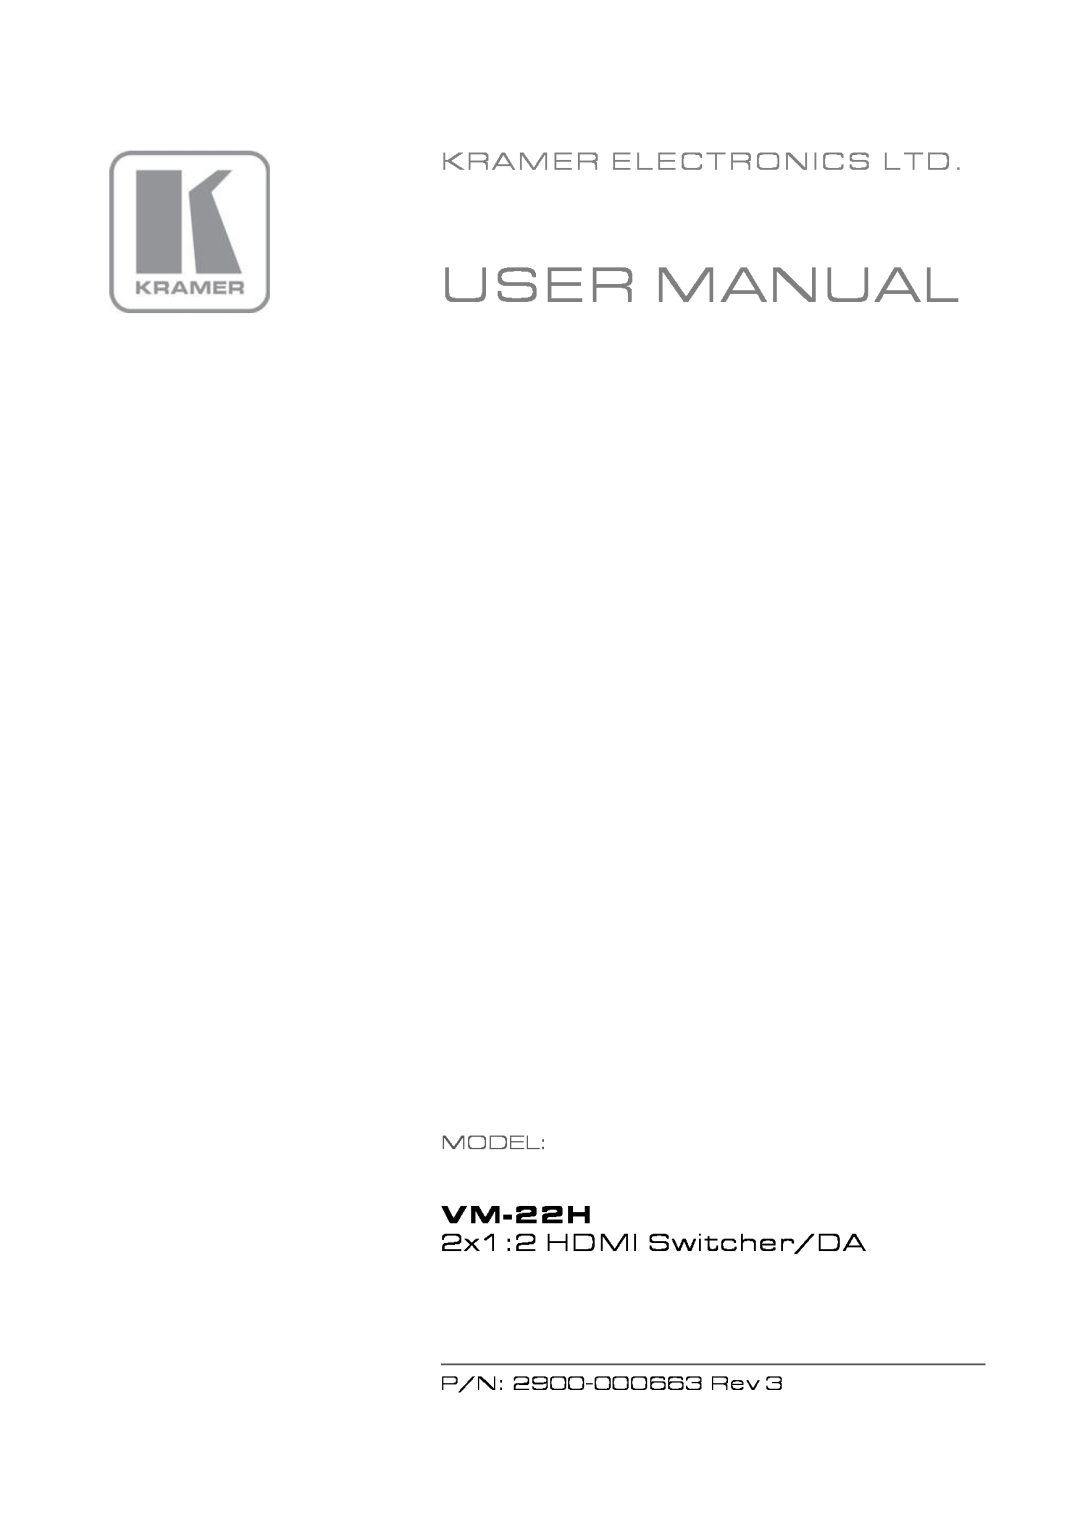 Kramer Electronics VM-22H user manual User Manual, 2x12 HDMI Switcher/DA, Model 